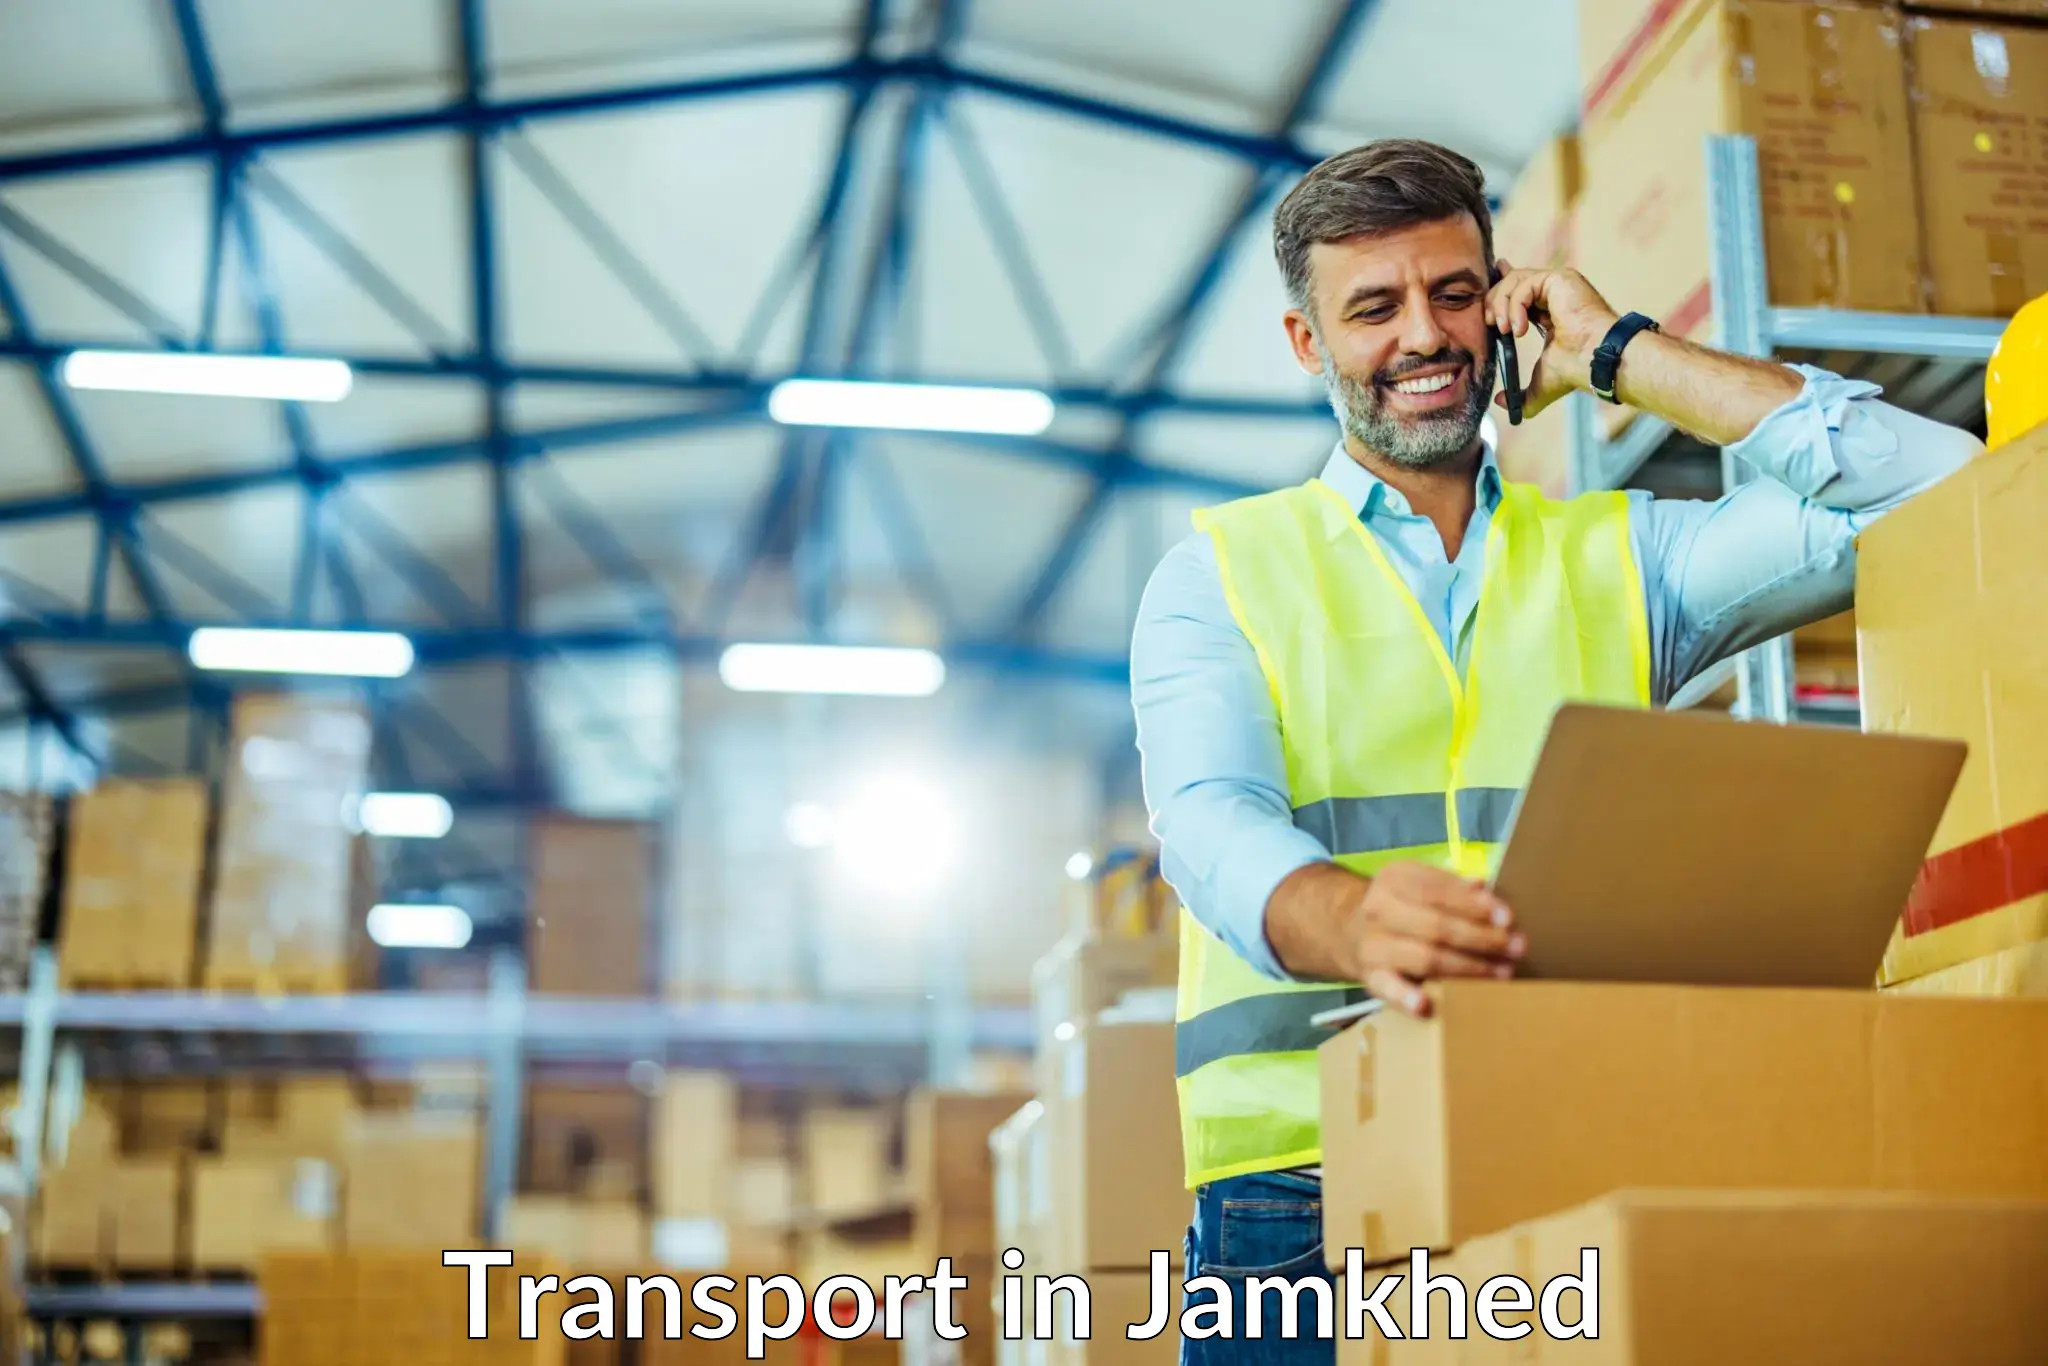 Transport shared services in Jamkhed